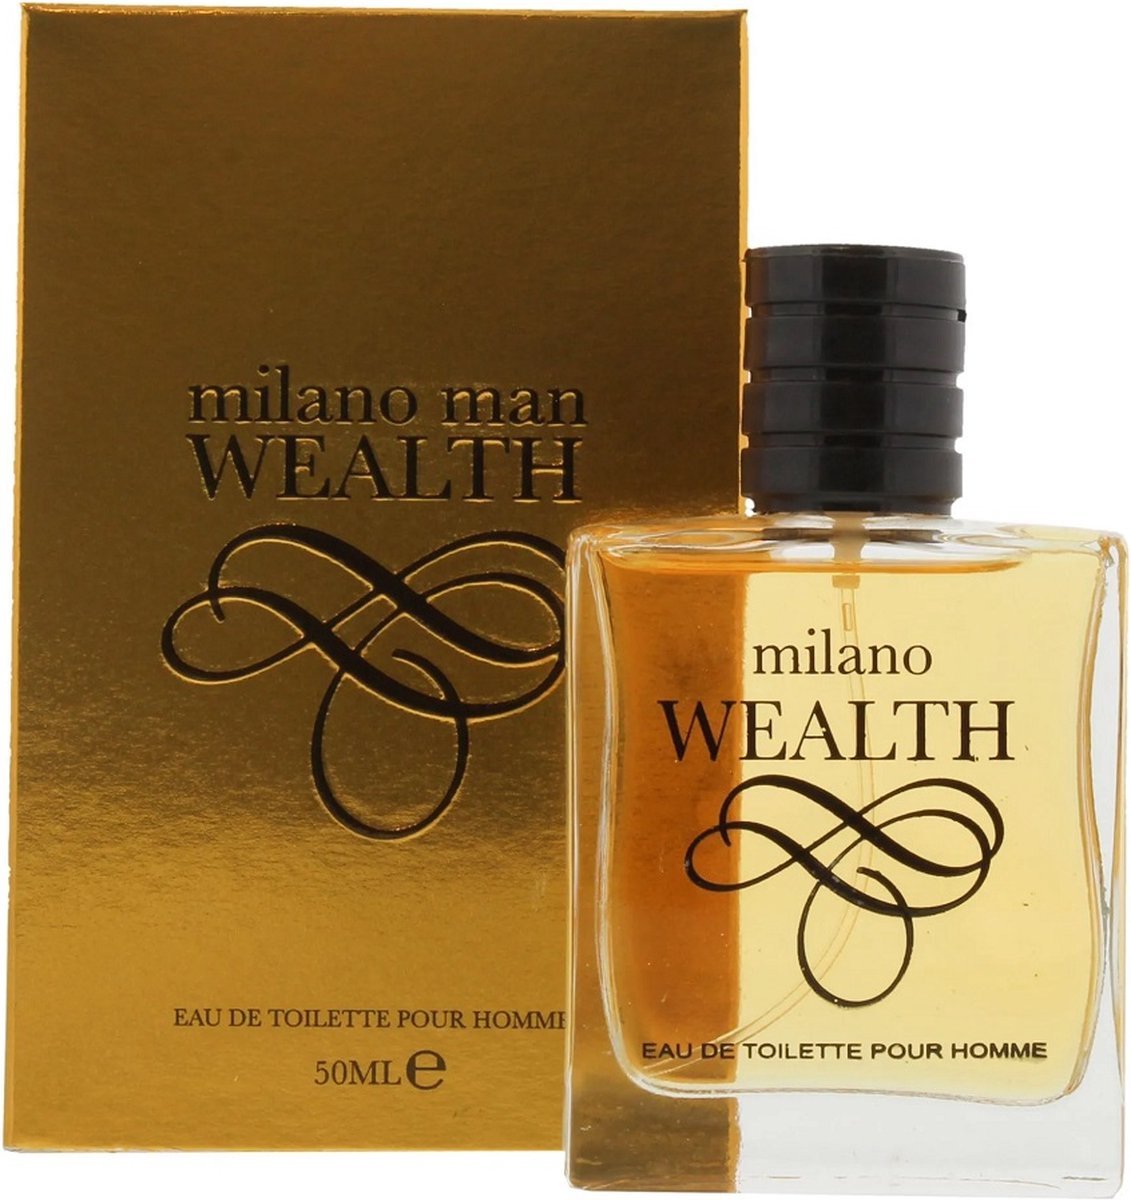 Milano Man - Wealth - Eau de Toilette - 50ml